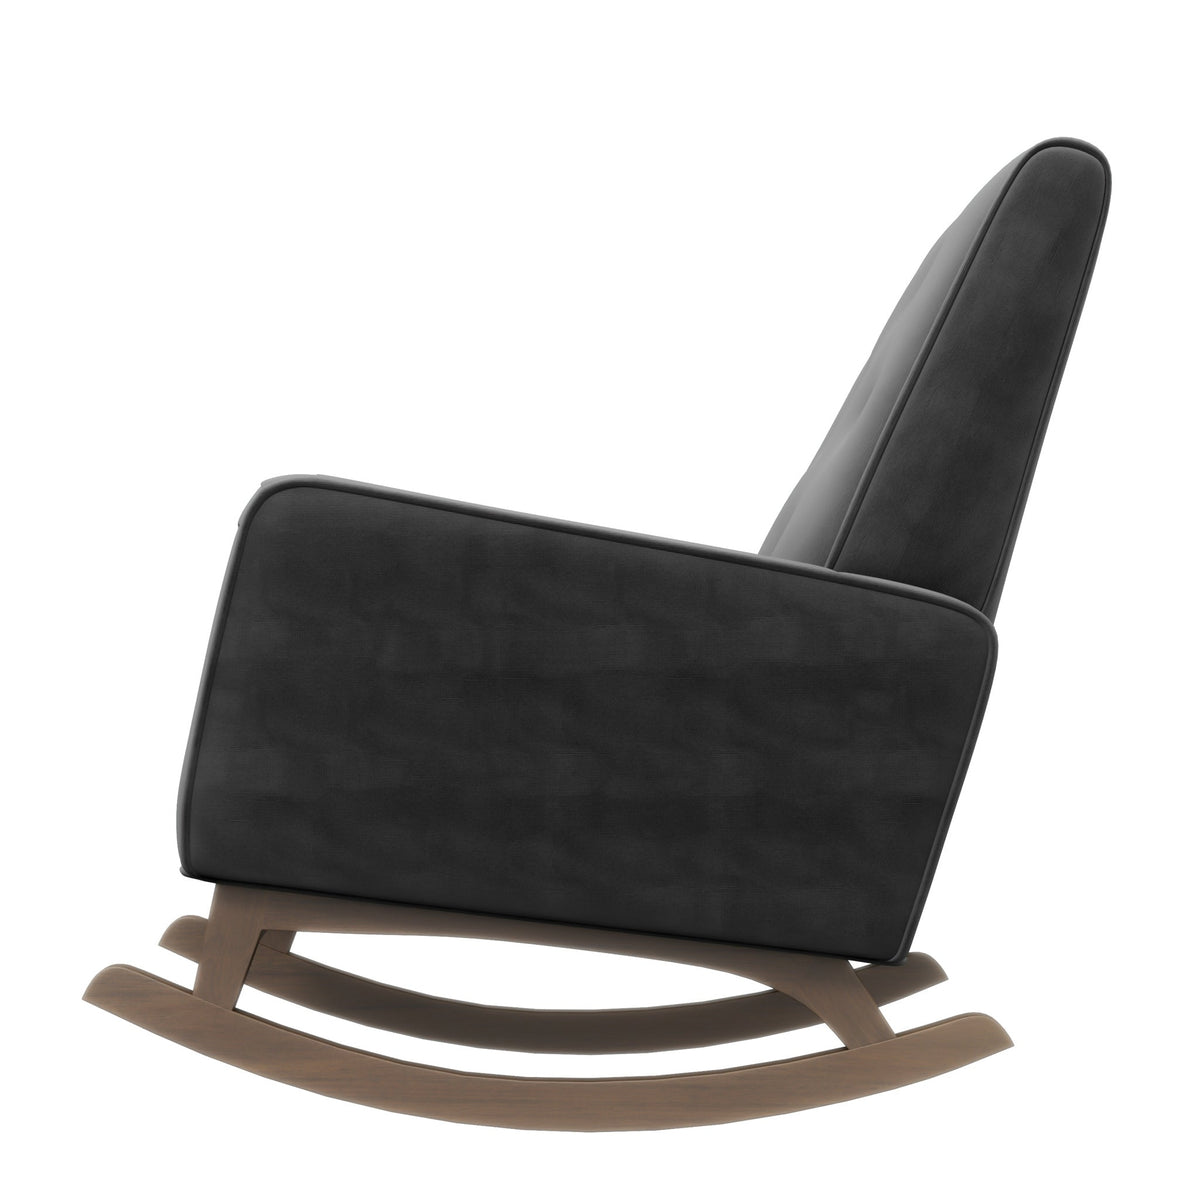 Windsor Dark Grey Velvet Rocking Chair  | MidinMod | Houston | Best Furniture stores in Houston